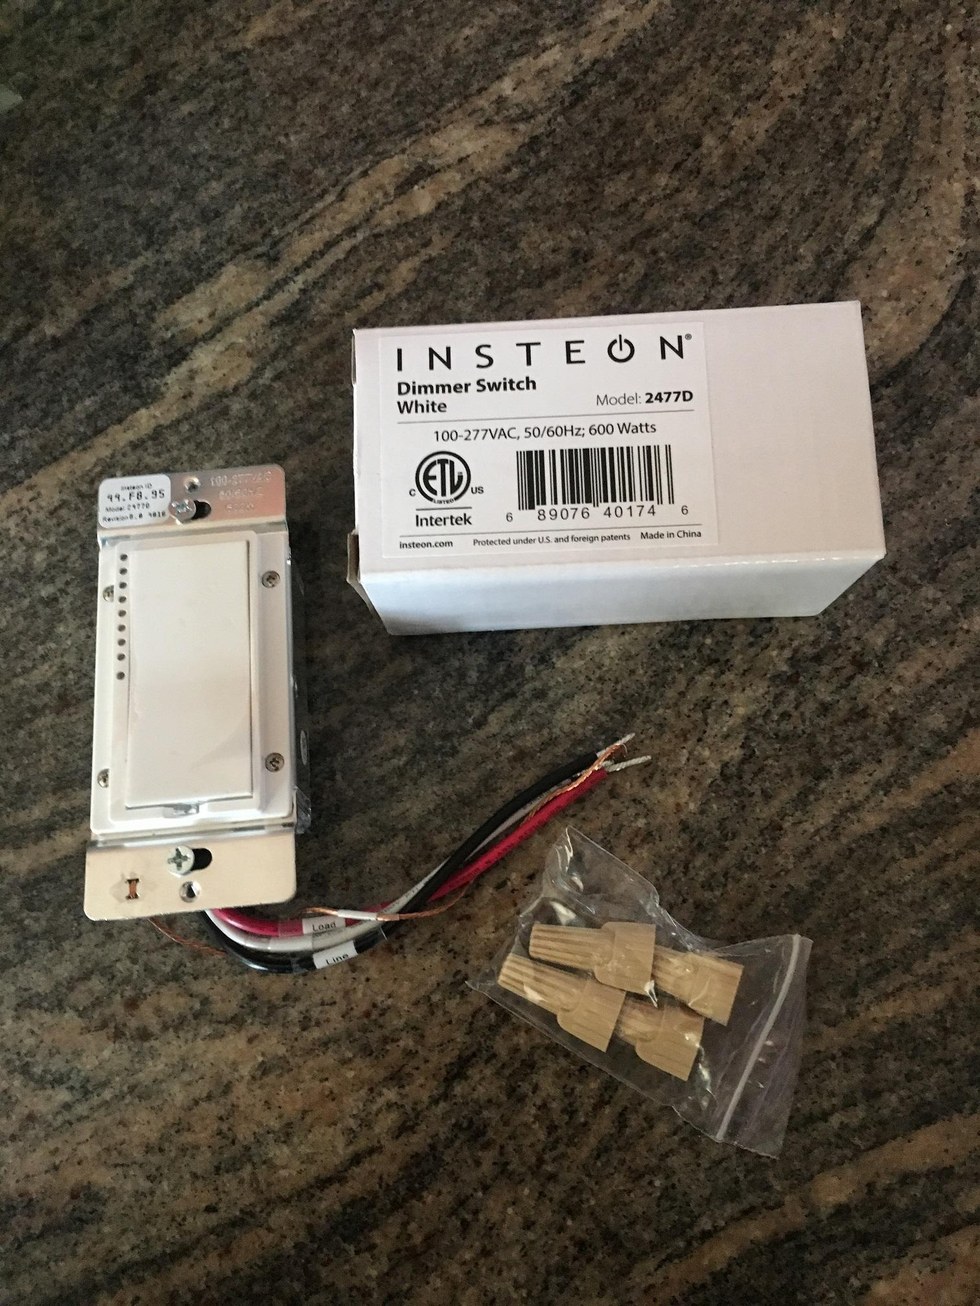 Installation of Insteon Dimmer Switch